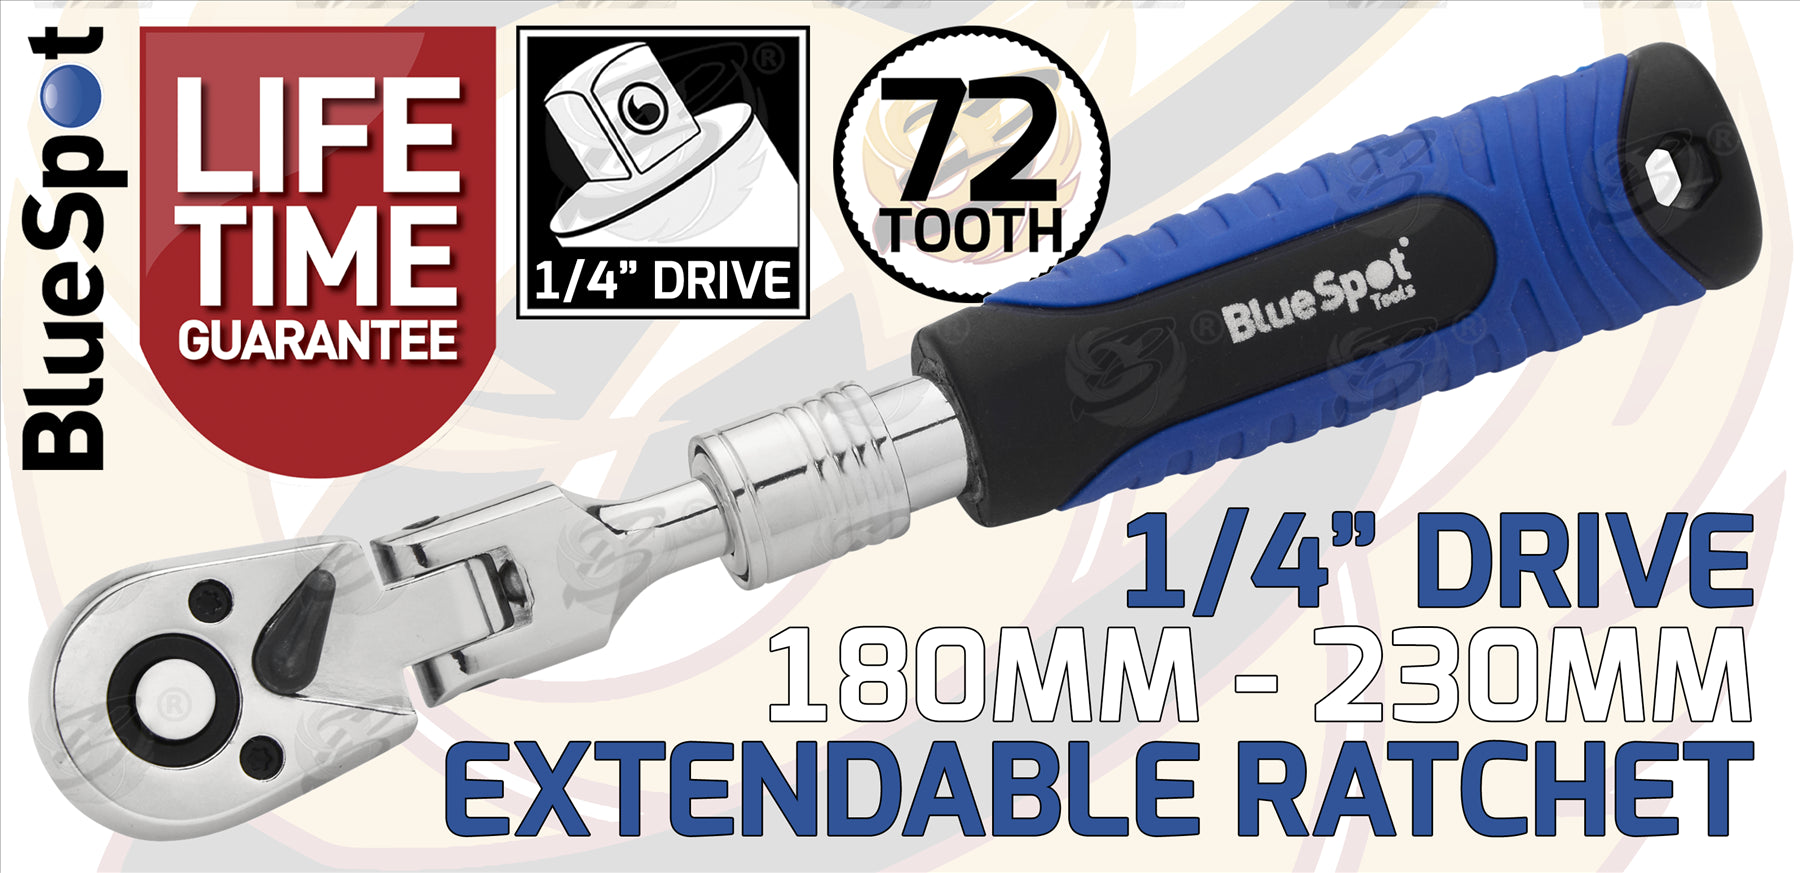 BLUESPOT 1/4" DRIVE 72 TOOTH EXTENDABLE FLEXIBLE RATCHET HANDLE ( 180MM - 230MM )